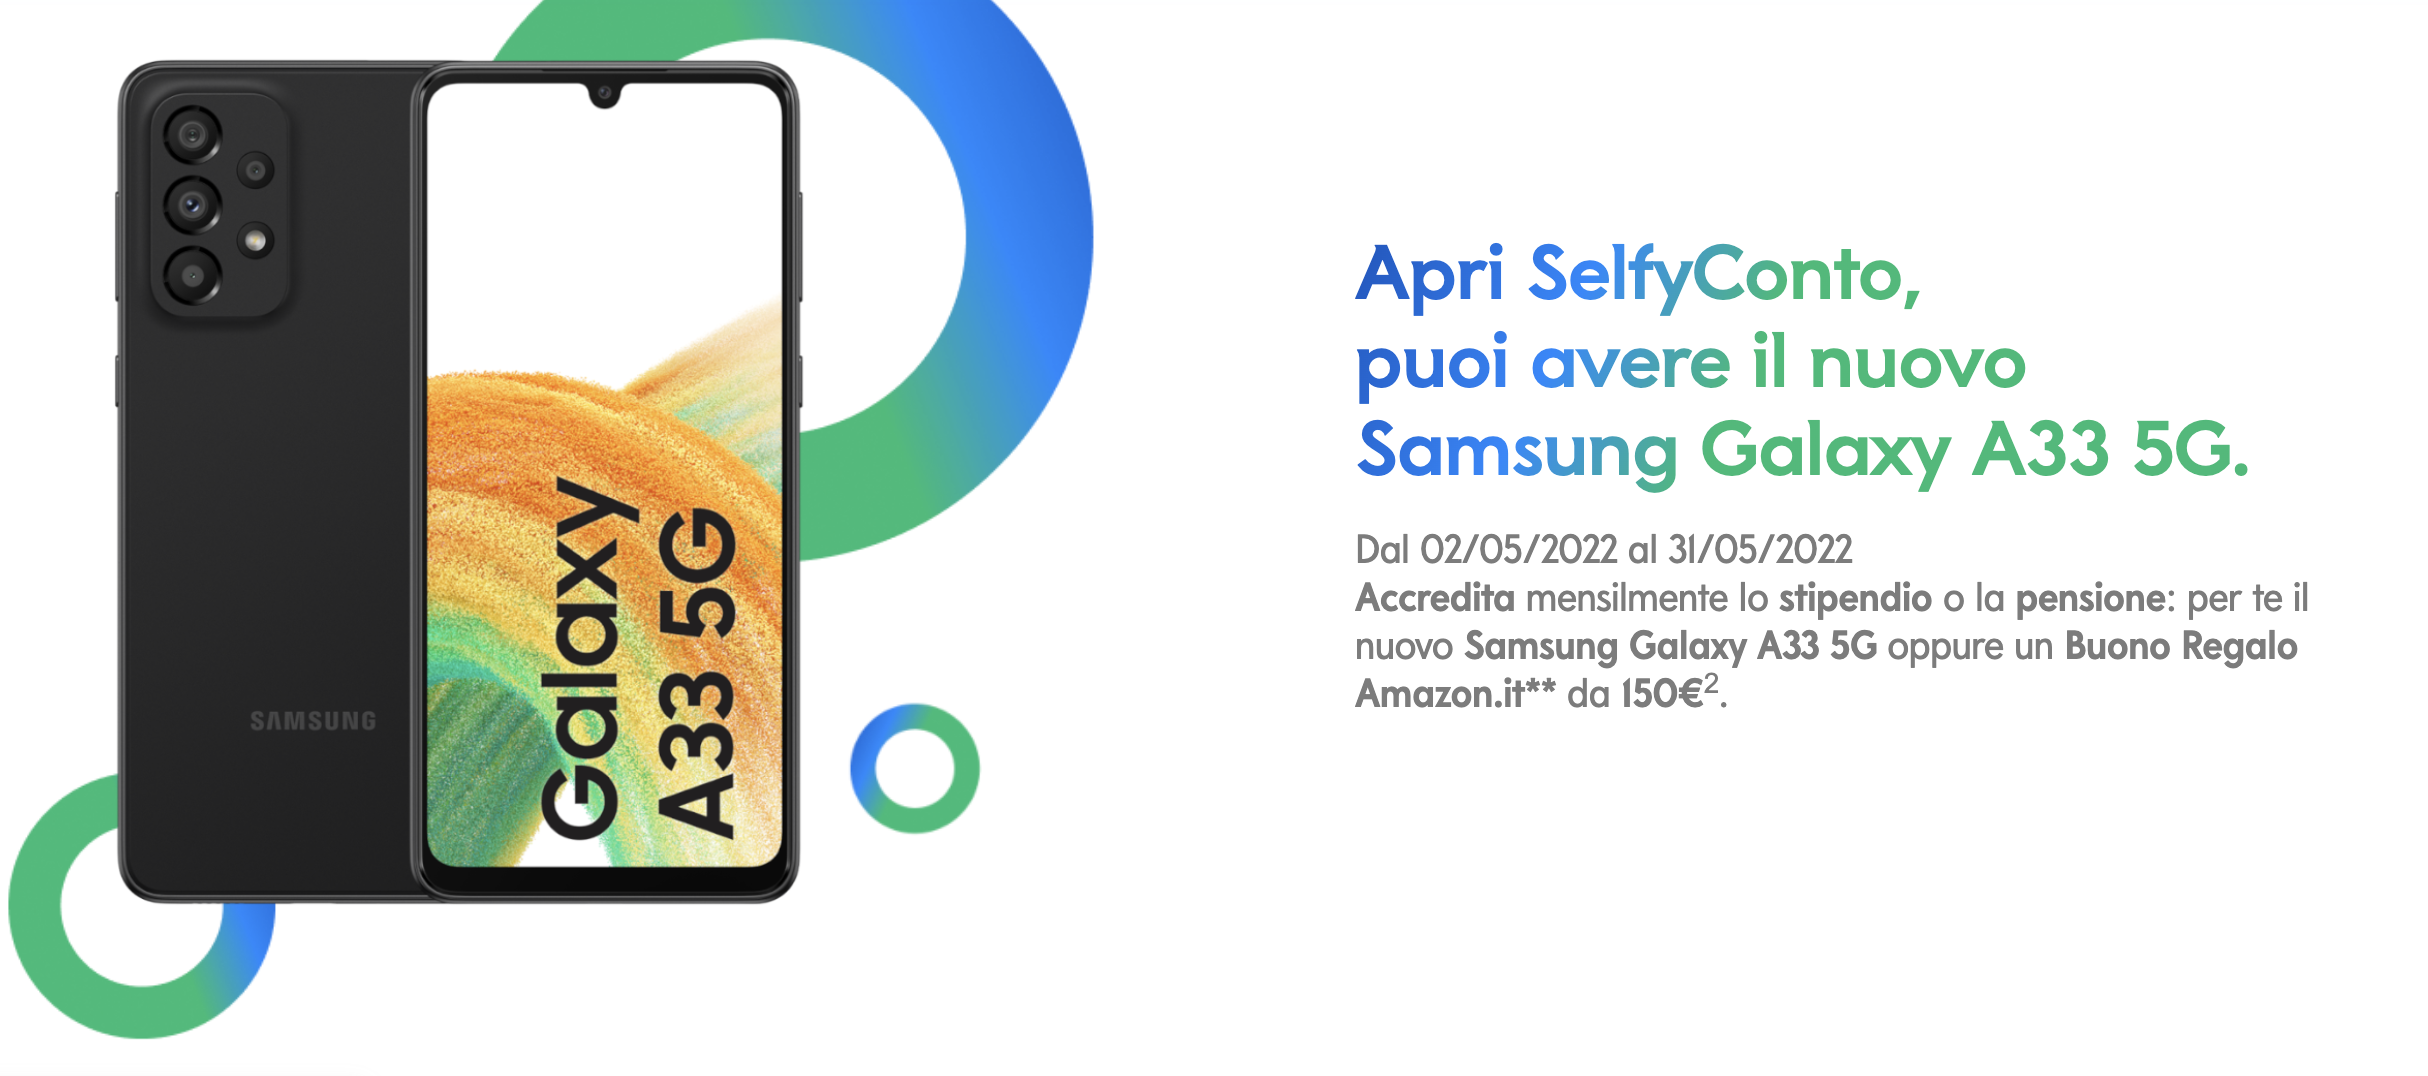 SelfyConto Banca Mediolanum Samsung Galaxy A33 5G buono Amazon